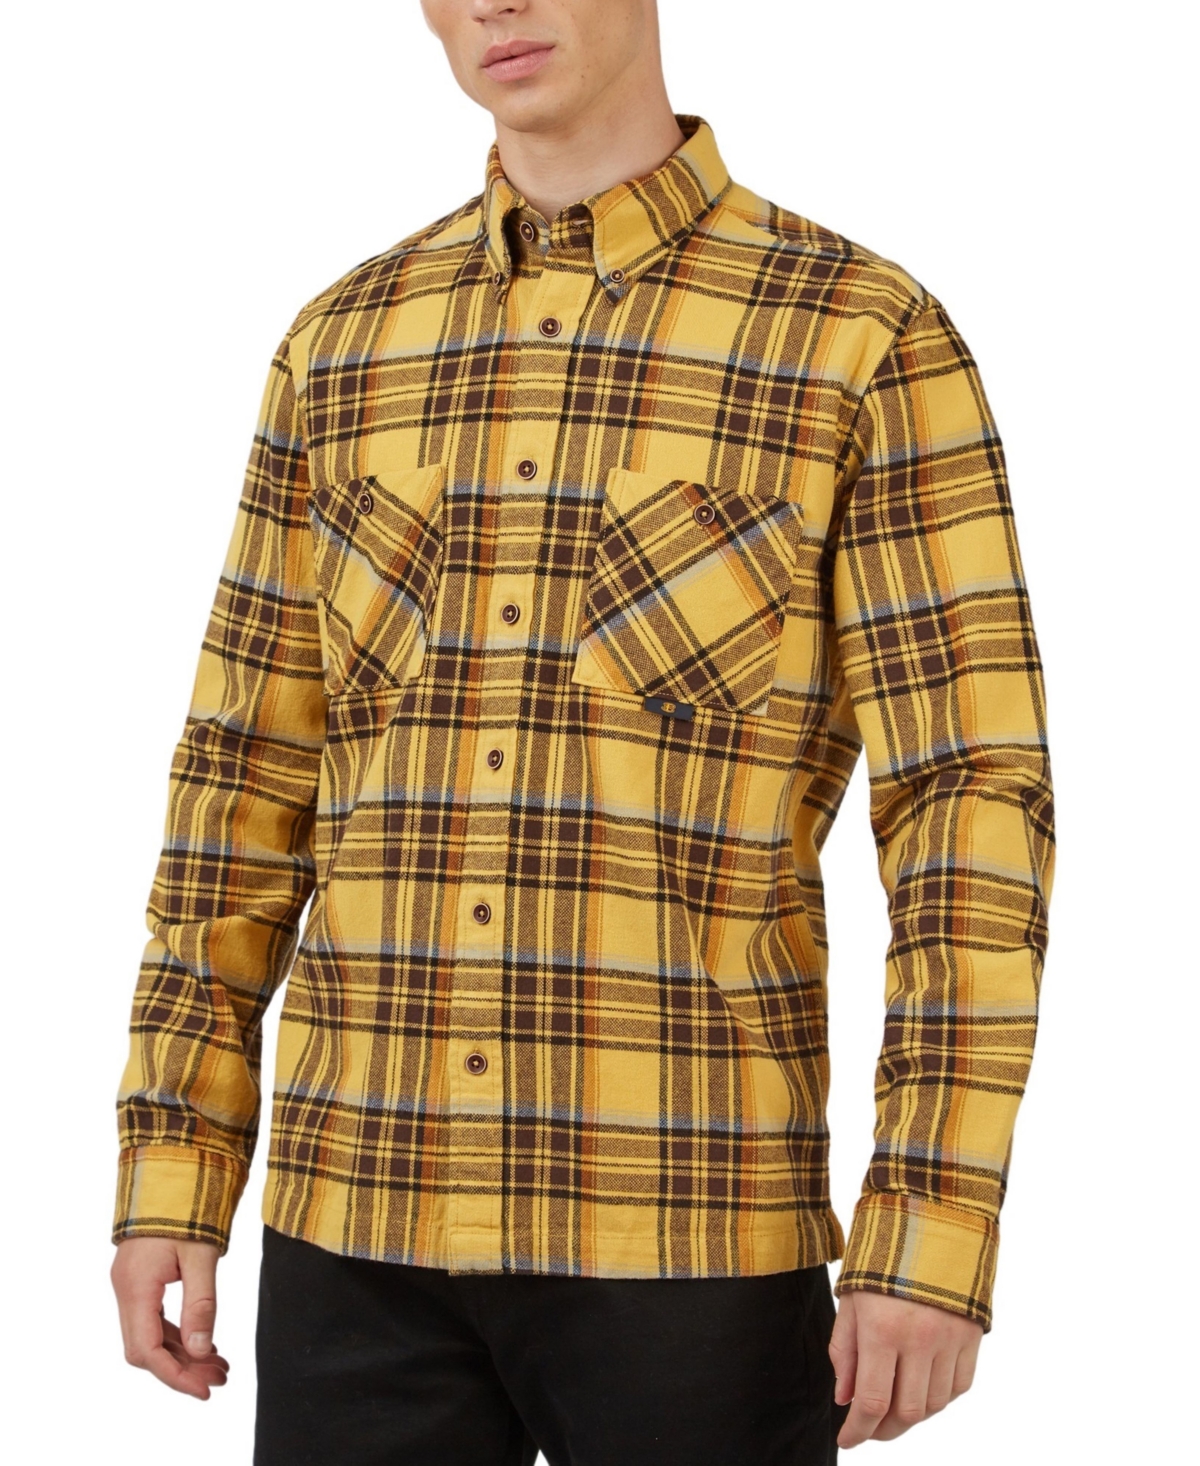 Men's Brushed Ivy Check Shirt - Bright Yellow